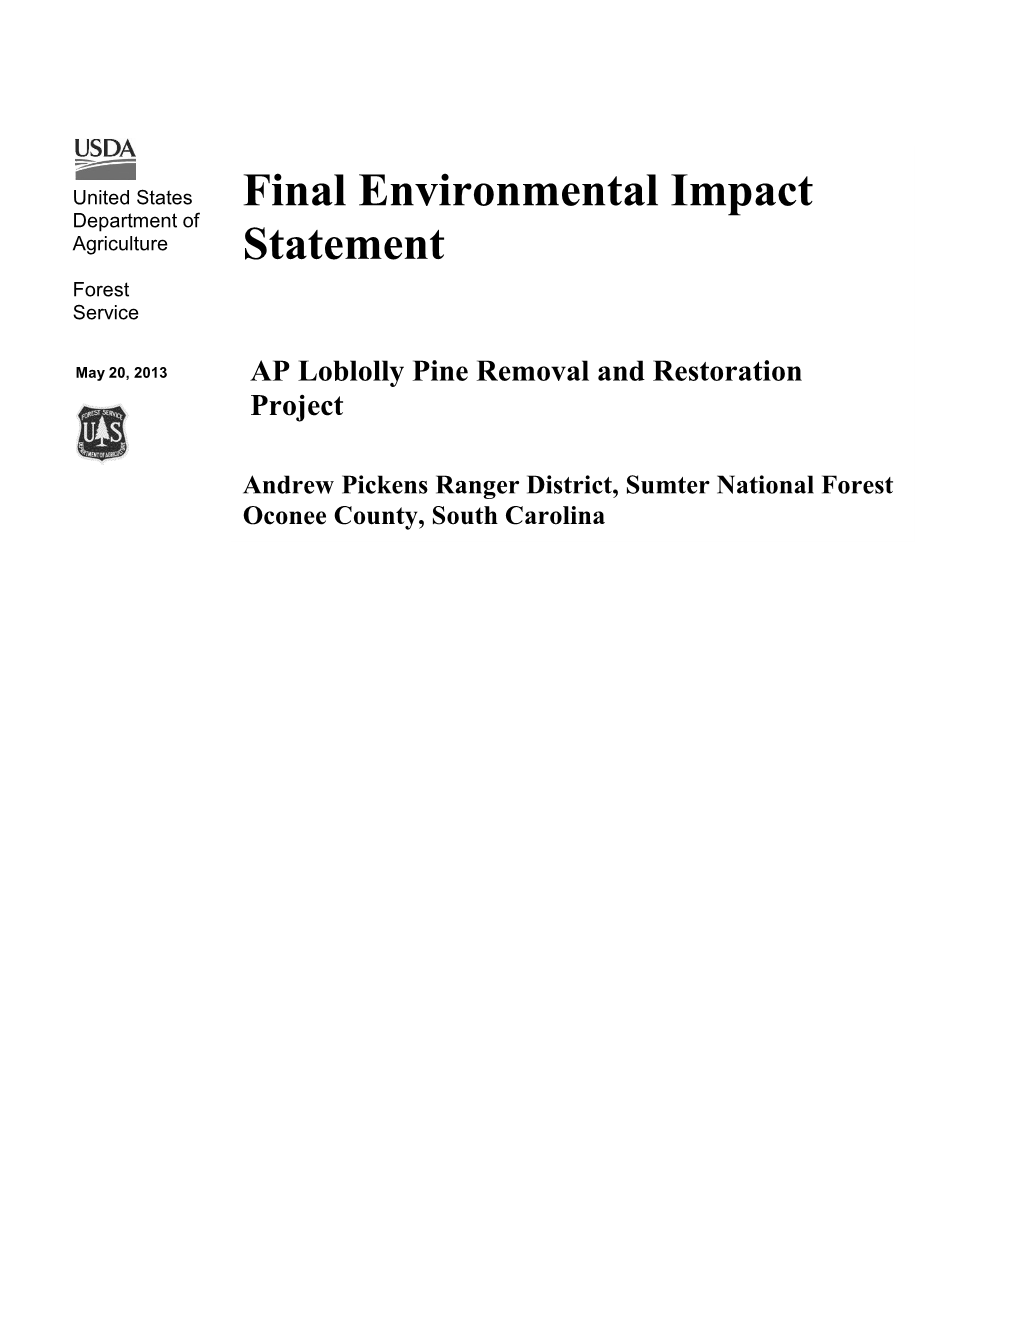 NEPA--Environmental Impact Statement